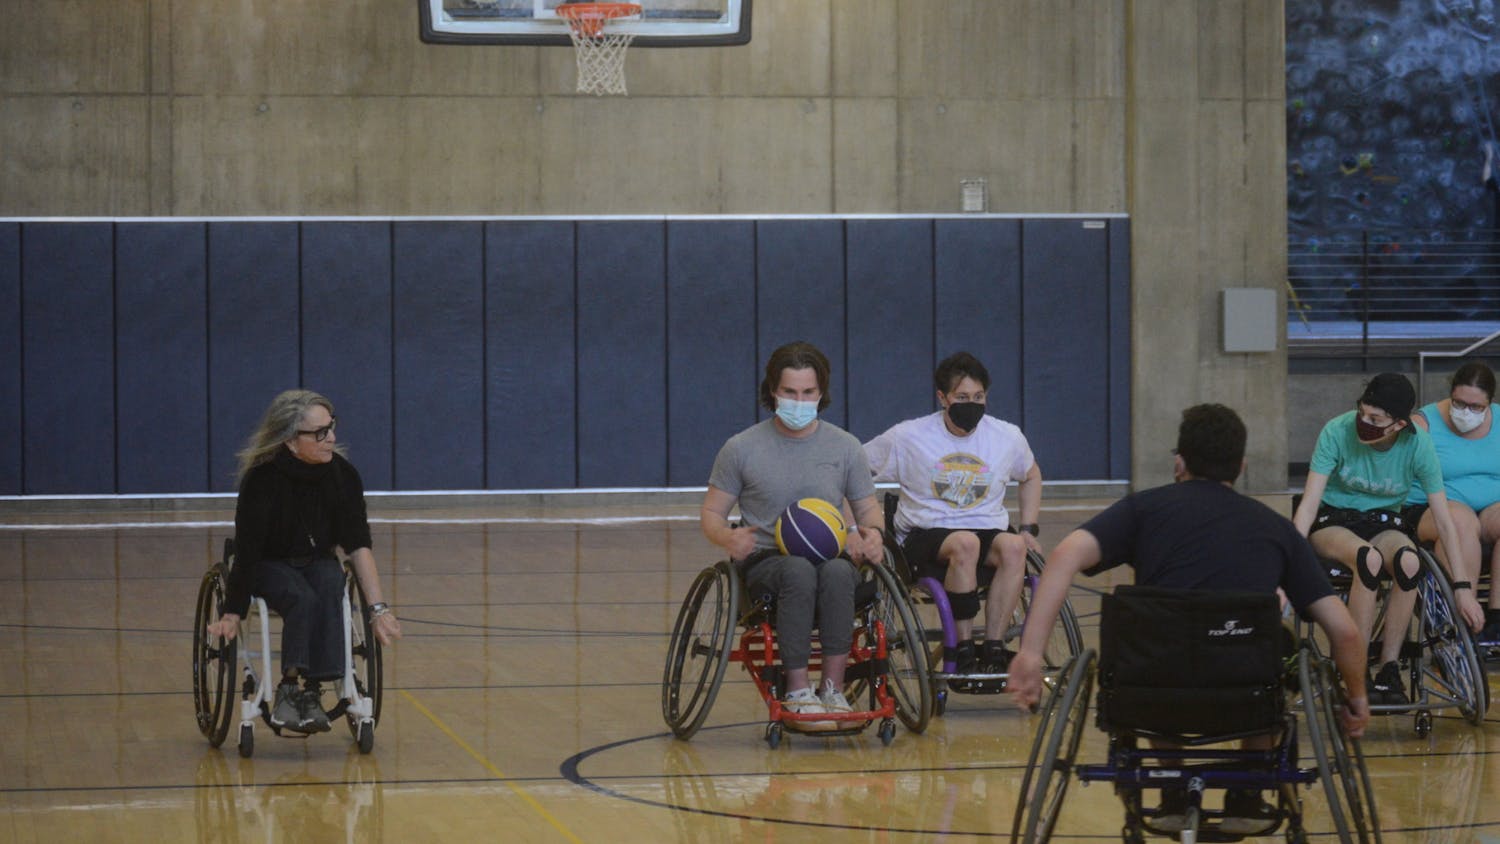 Wheelchair Basketball - 1 of 1